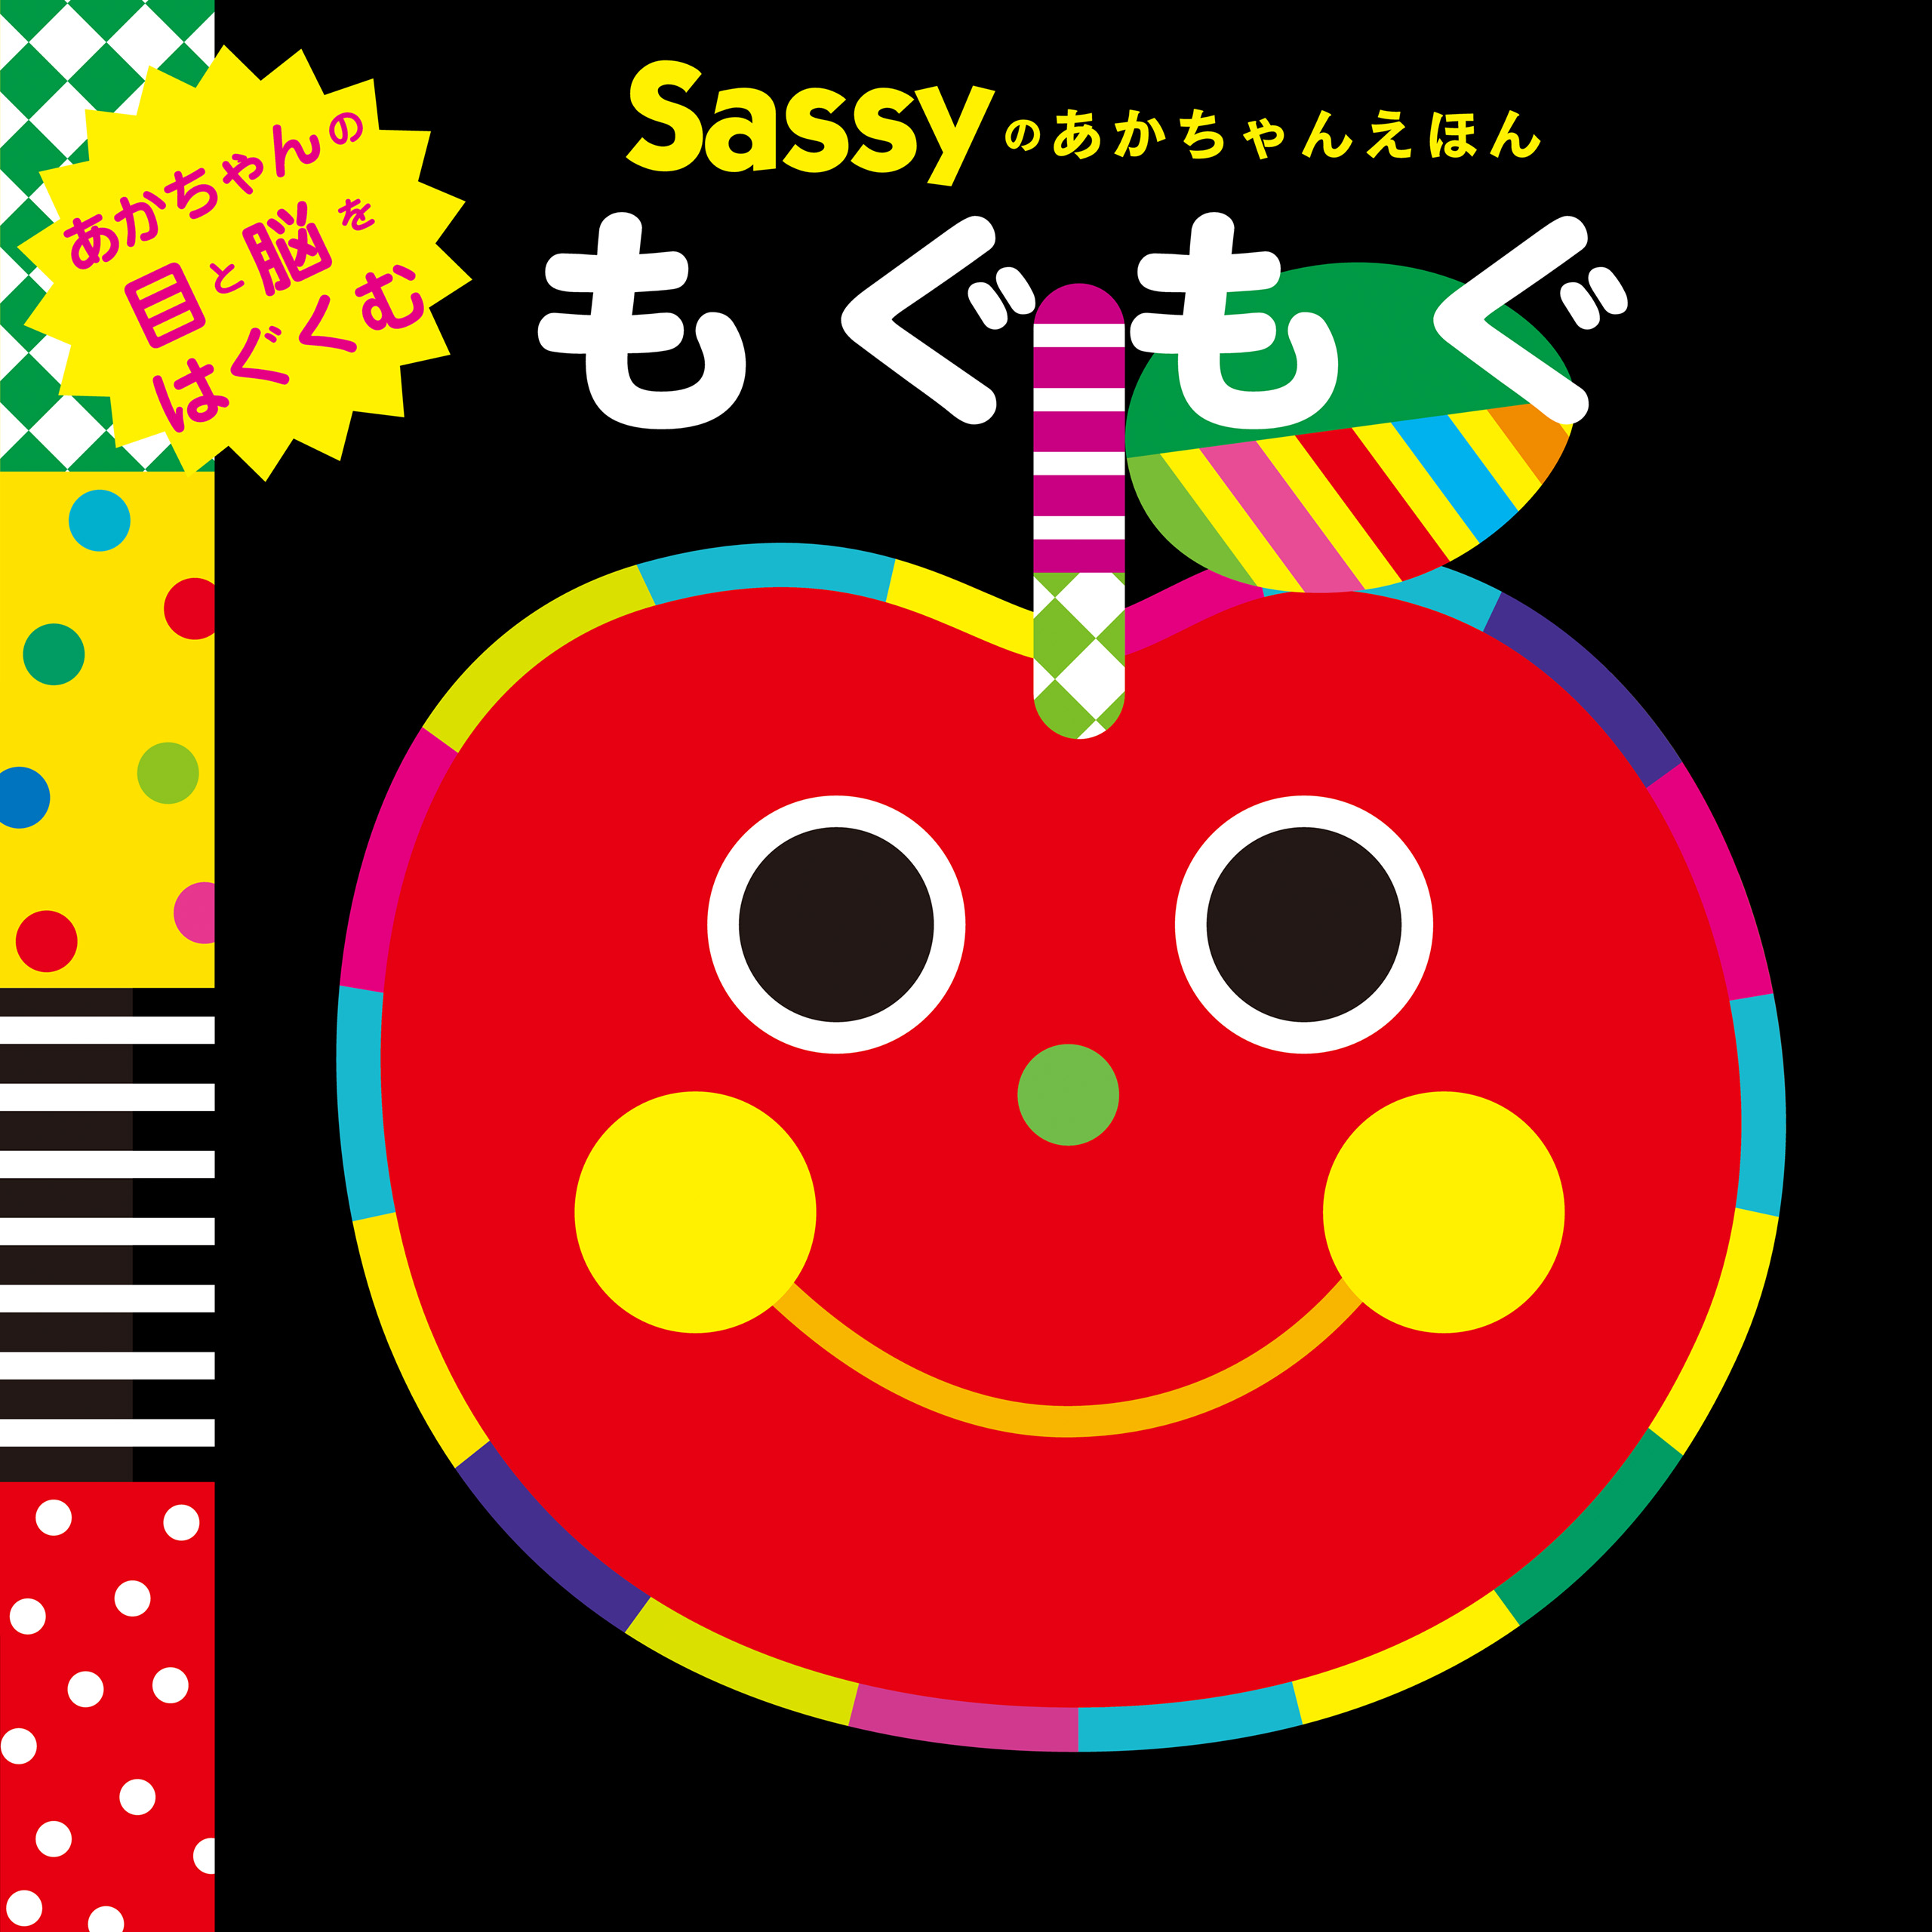 Sassyのあかちゃんえほん もぐもぐ - Sassy/DADWAY/LaZOO - 漫画